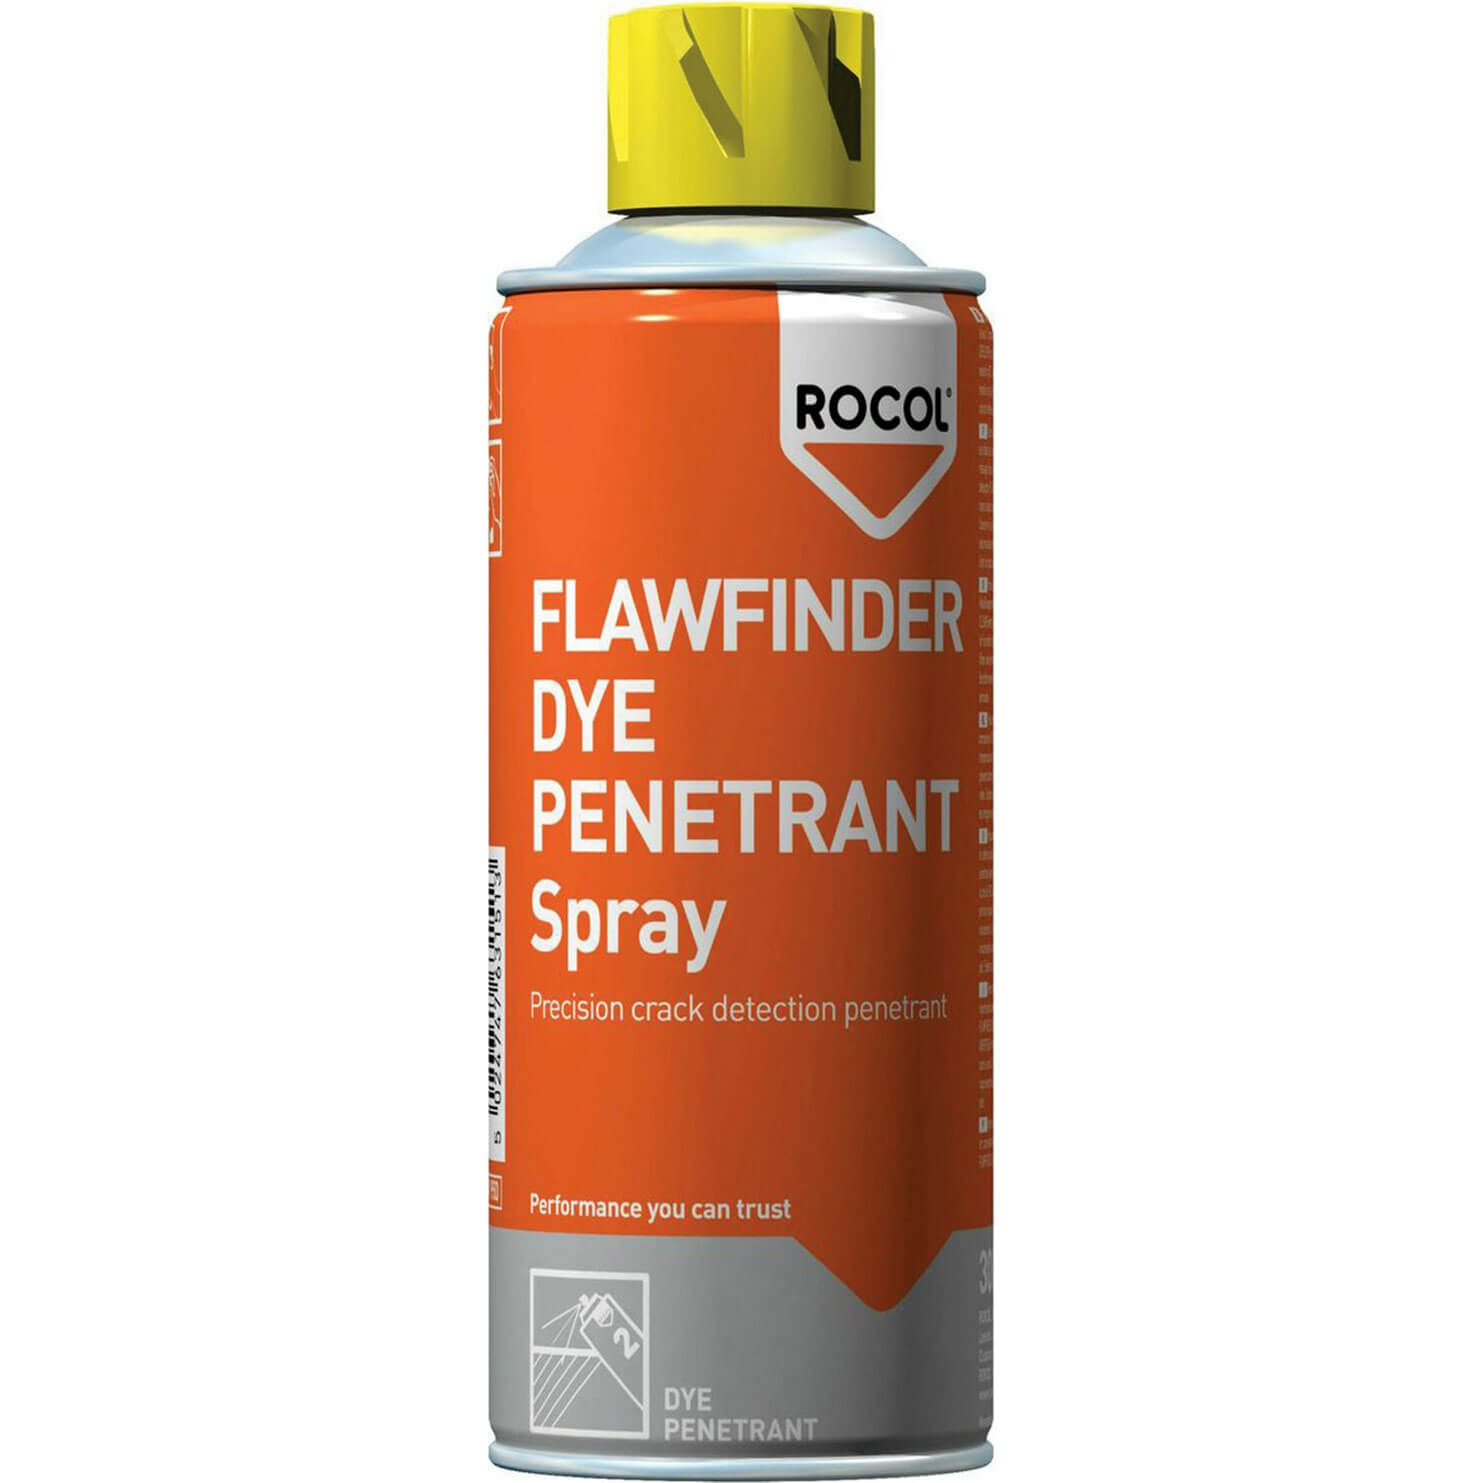 Image of Rocol Flaw finder Dye Penetrant Spray 300ml